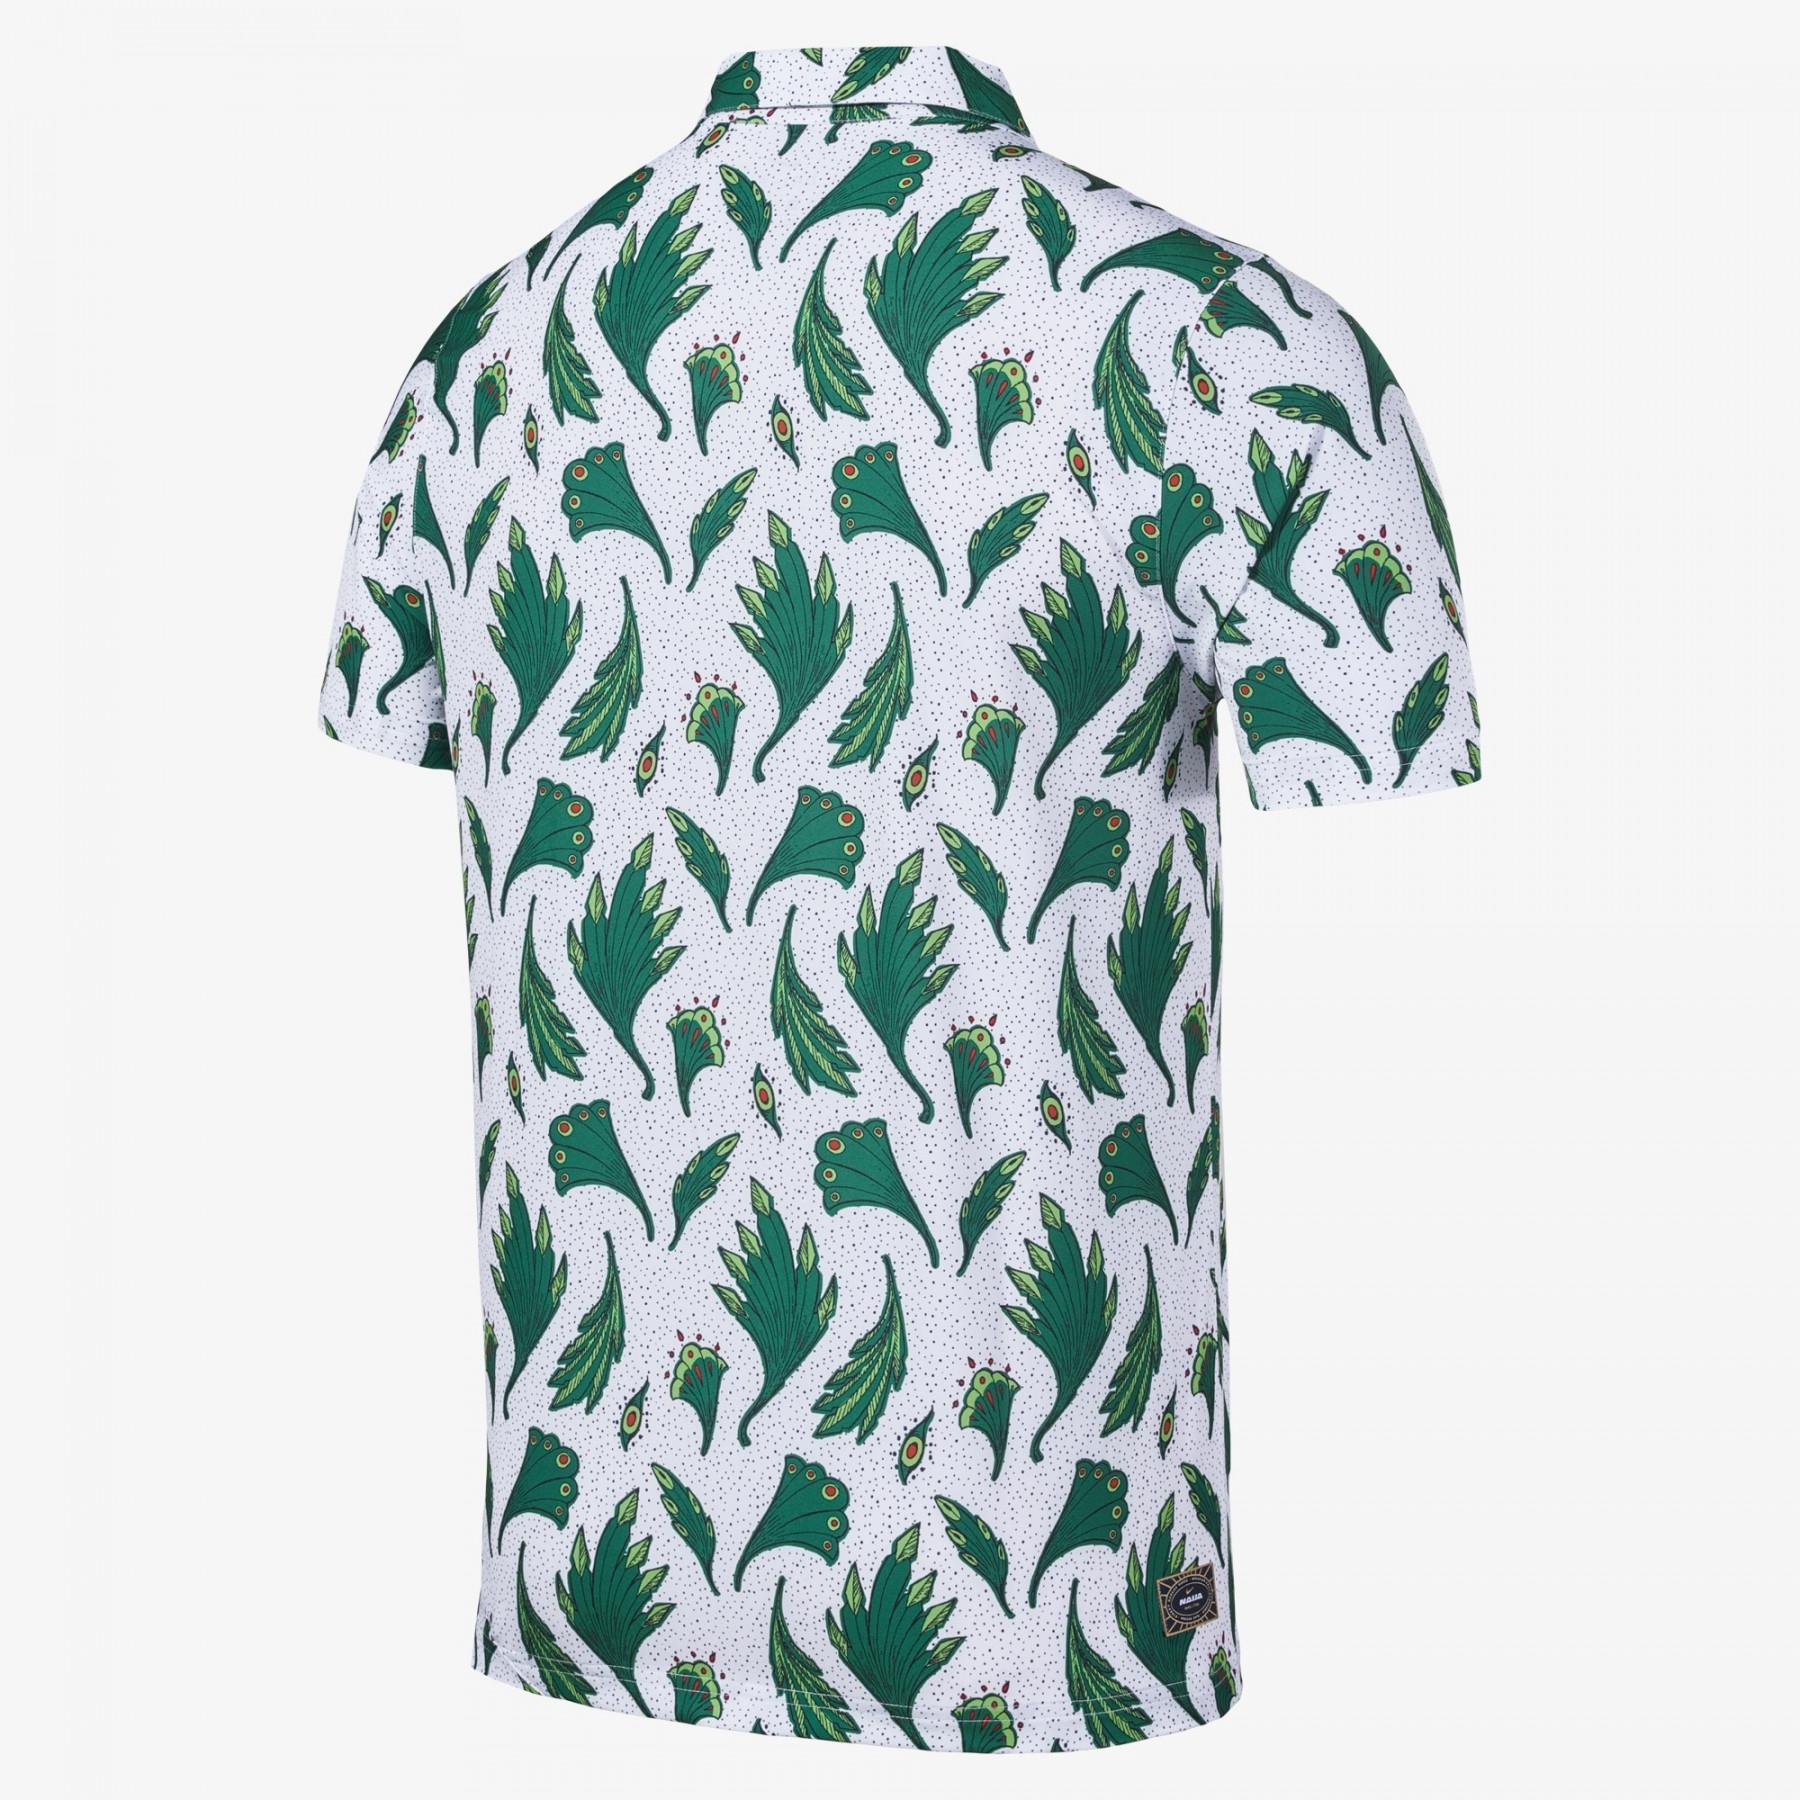 Nigeria schaats shirt 2020